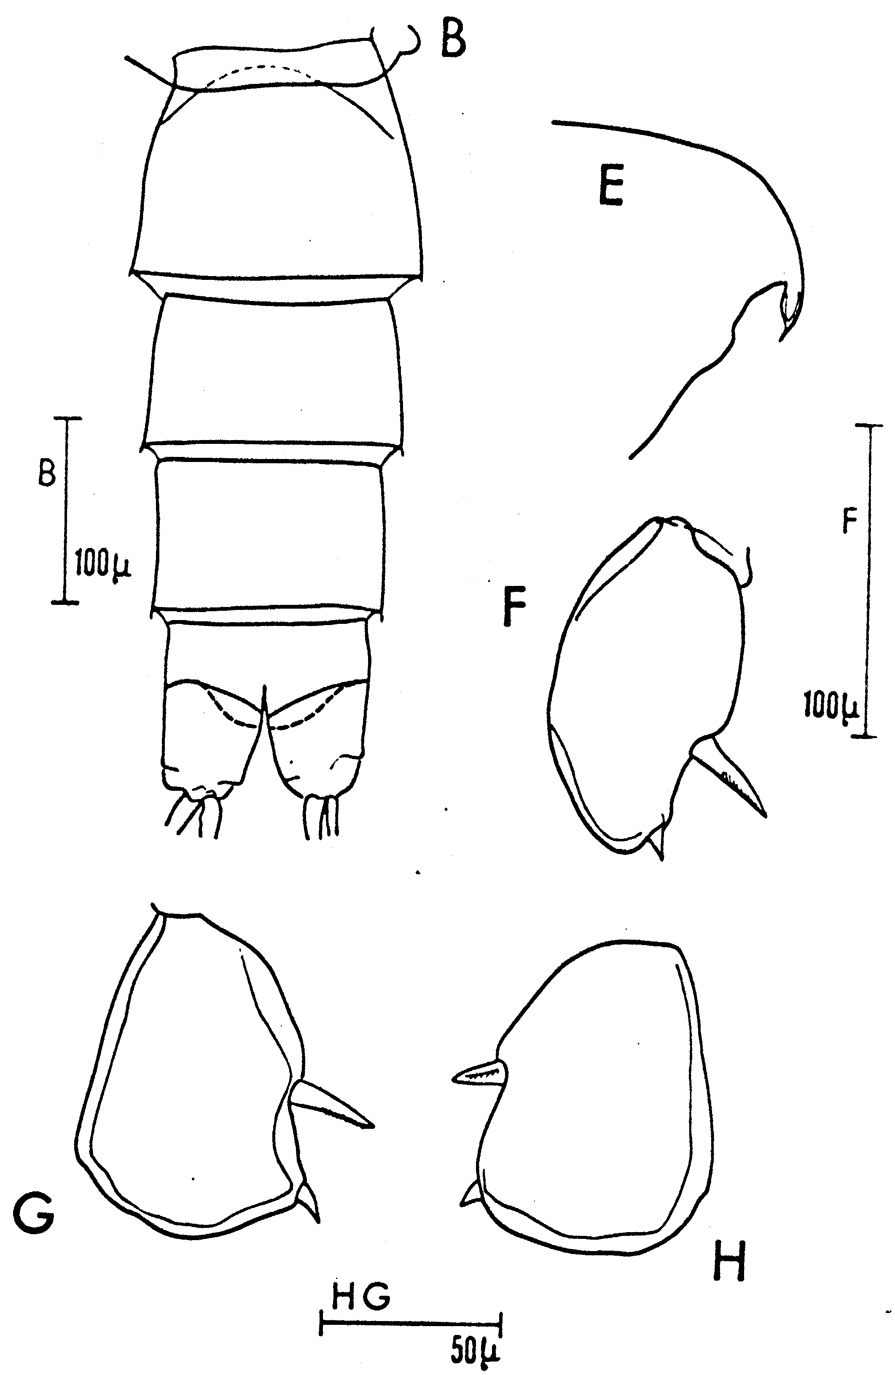 Species Scolecithricella dentata - Plate 18 of morphological figures